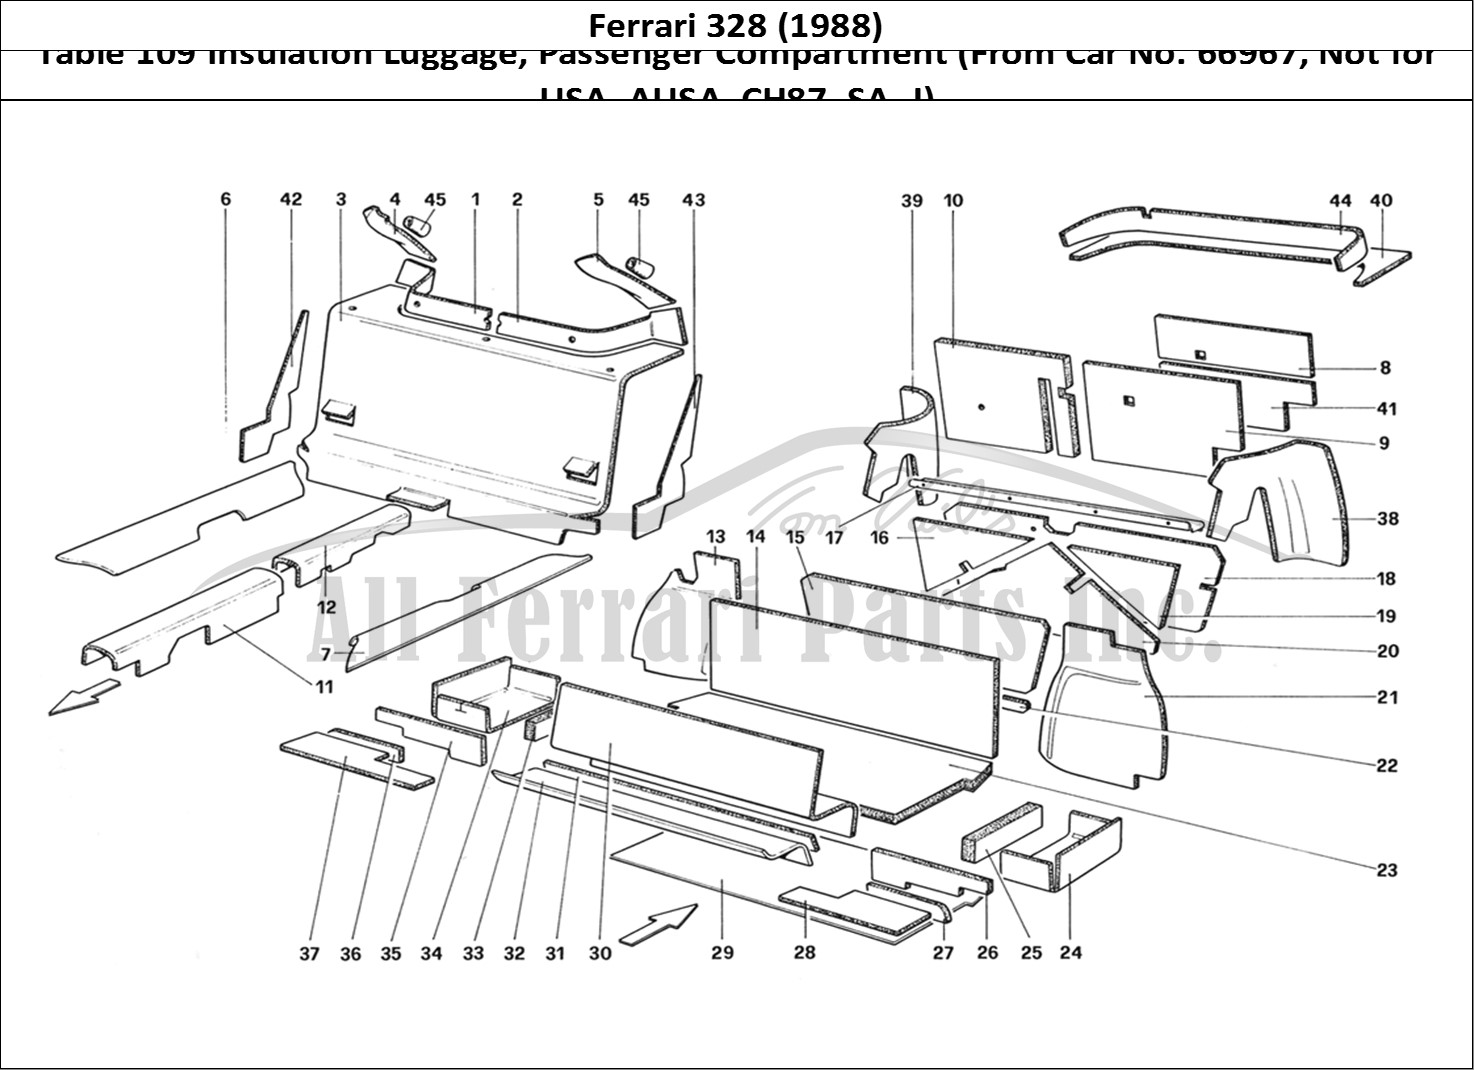 Ferrari Parts Ferrari 328 (1988) Page 109 Luggage and Passenger Com